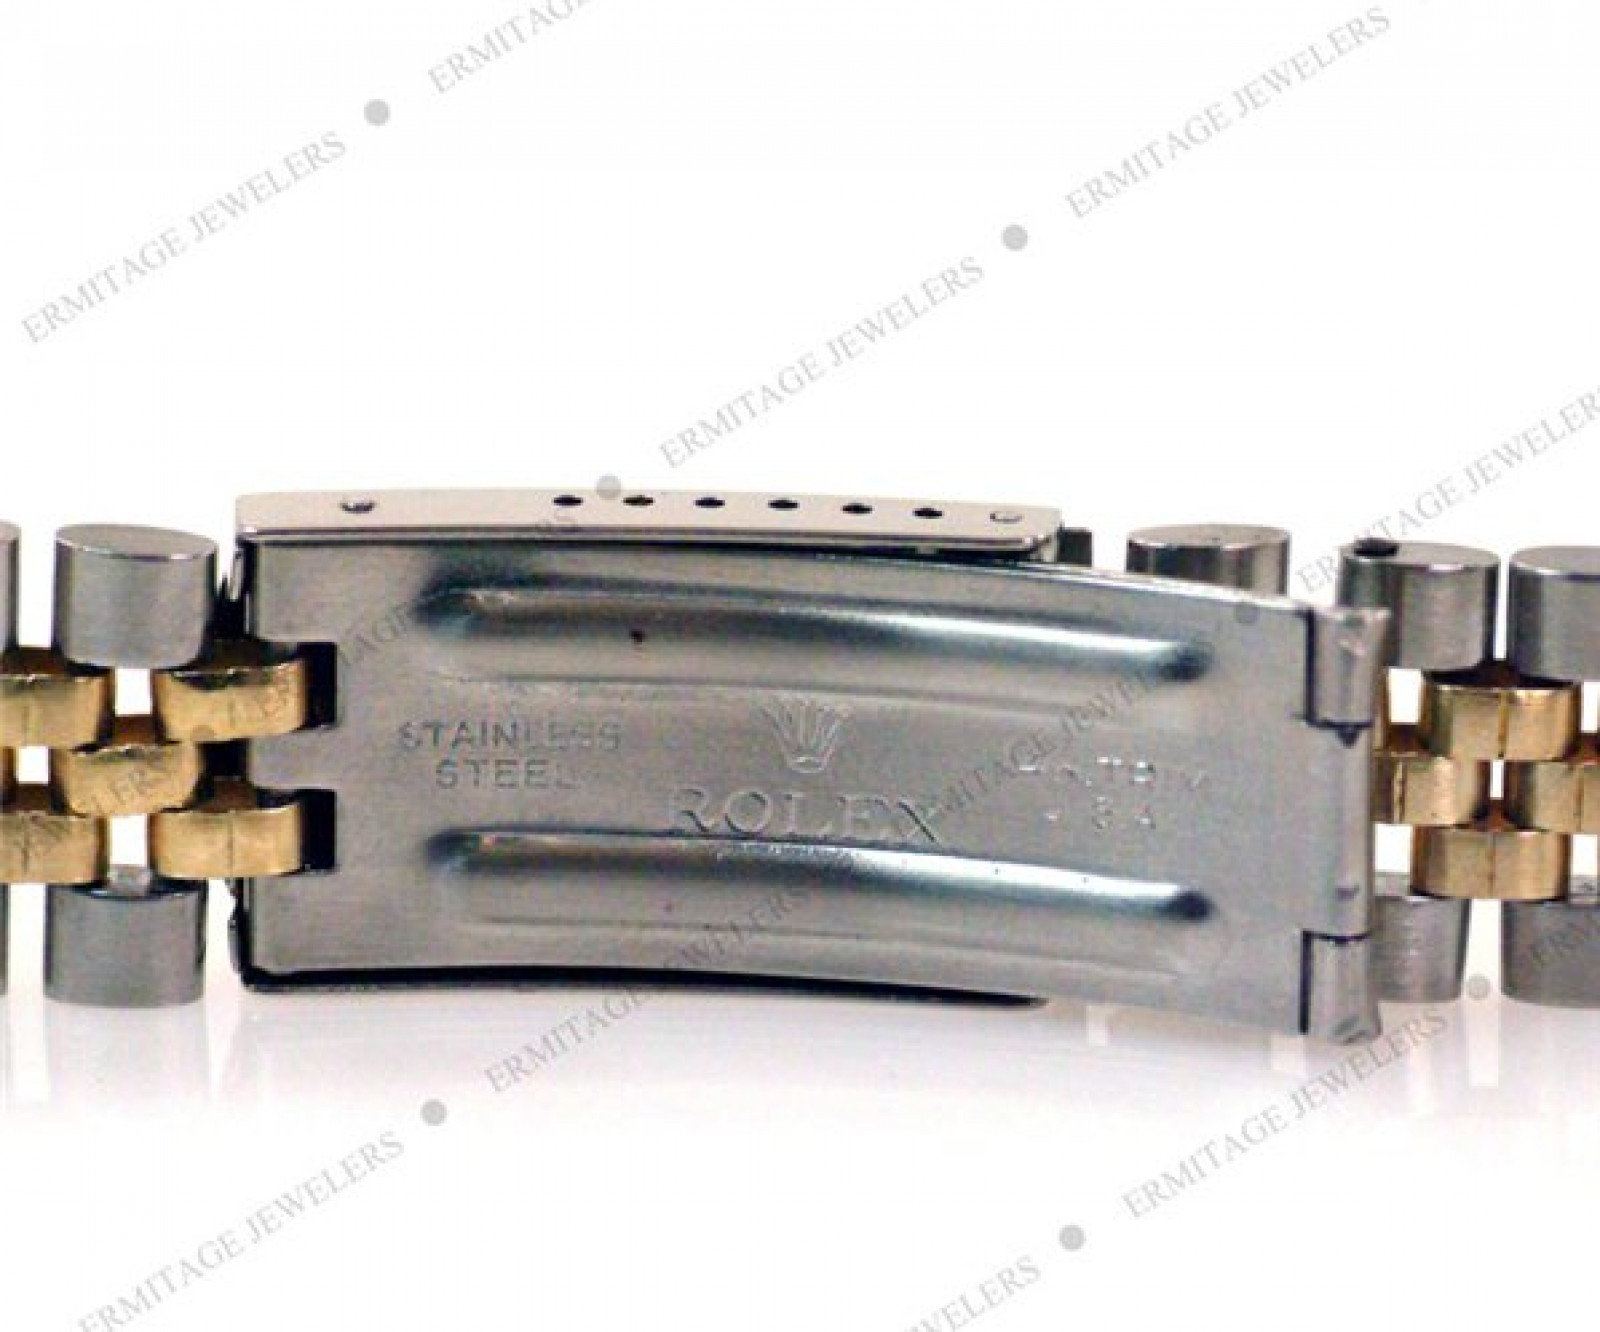 Classic Rolex Datejust 16013 Gold & Steel